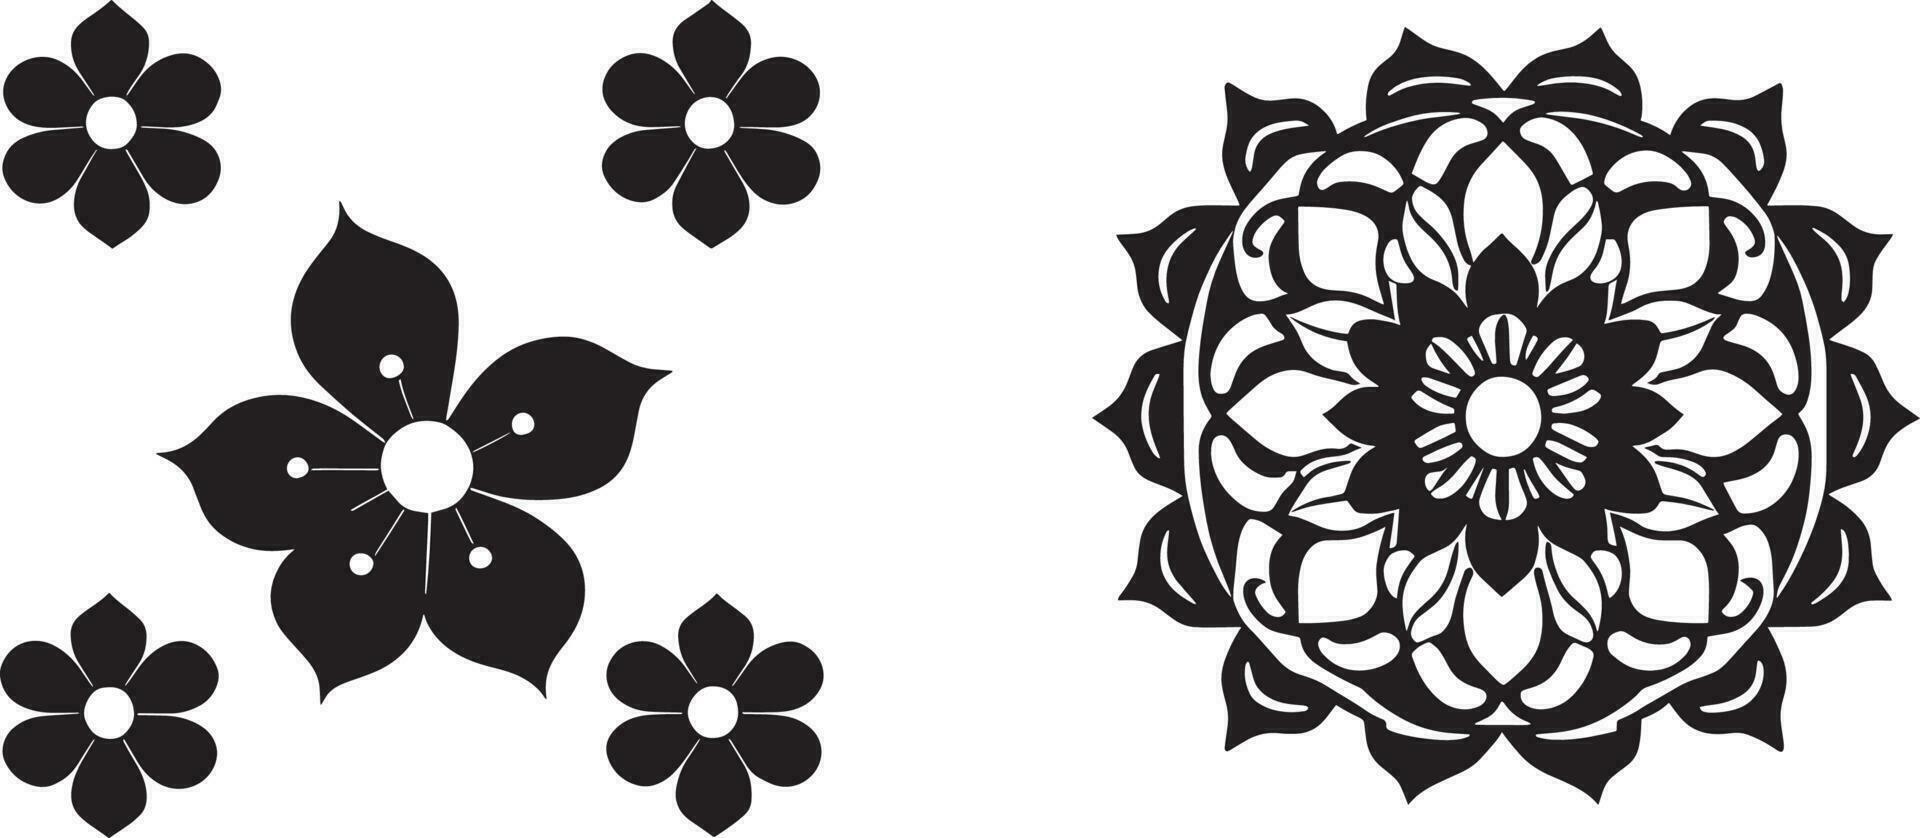 Simple Flower Designs Black And White Vector Art